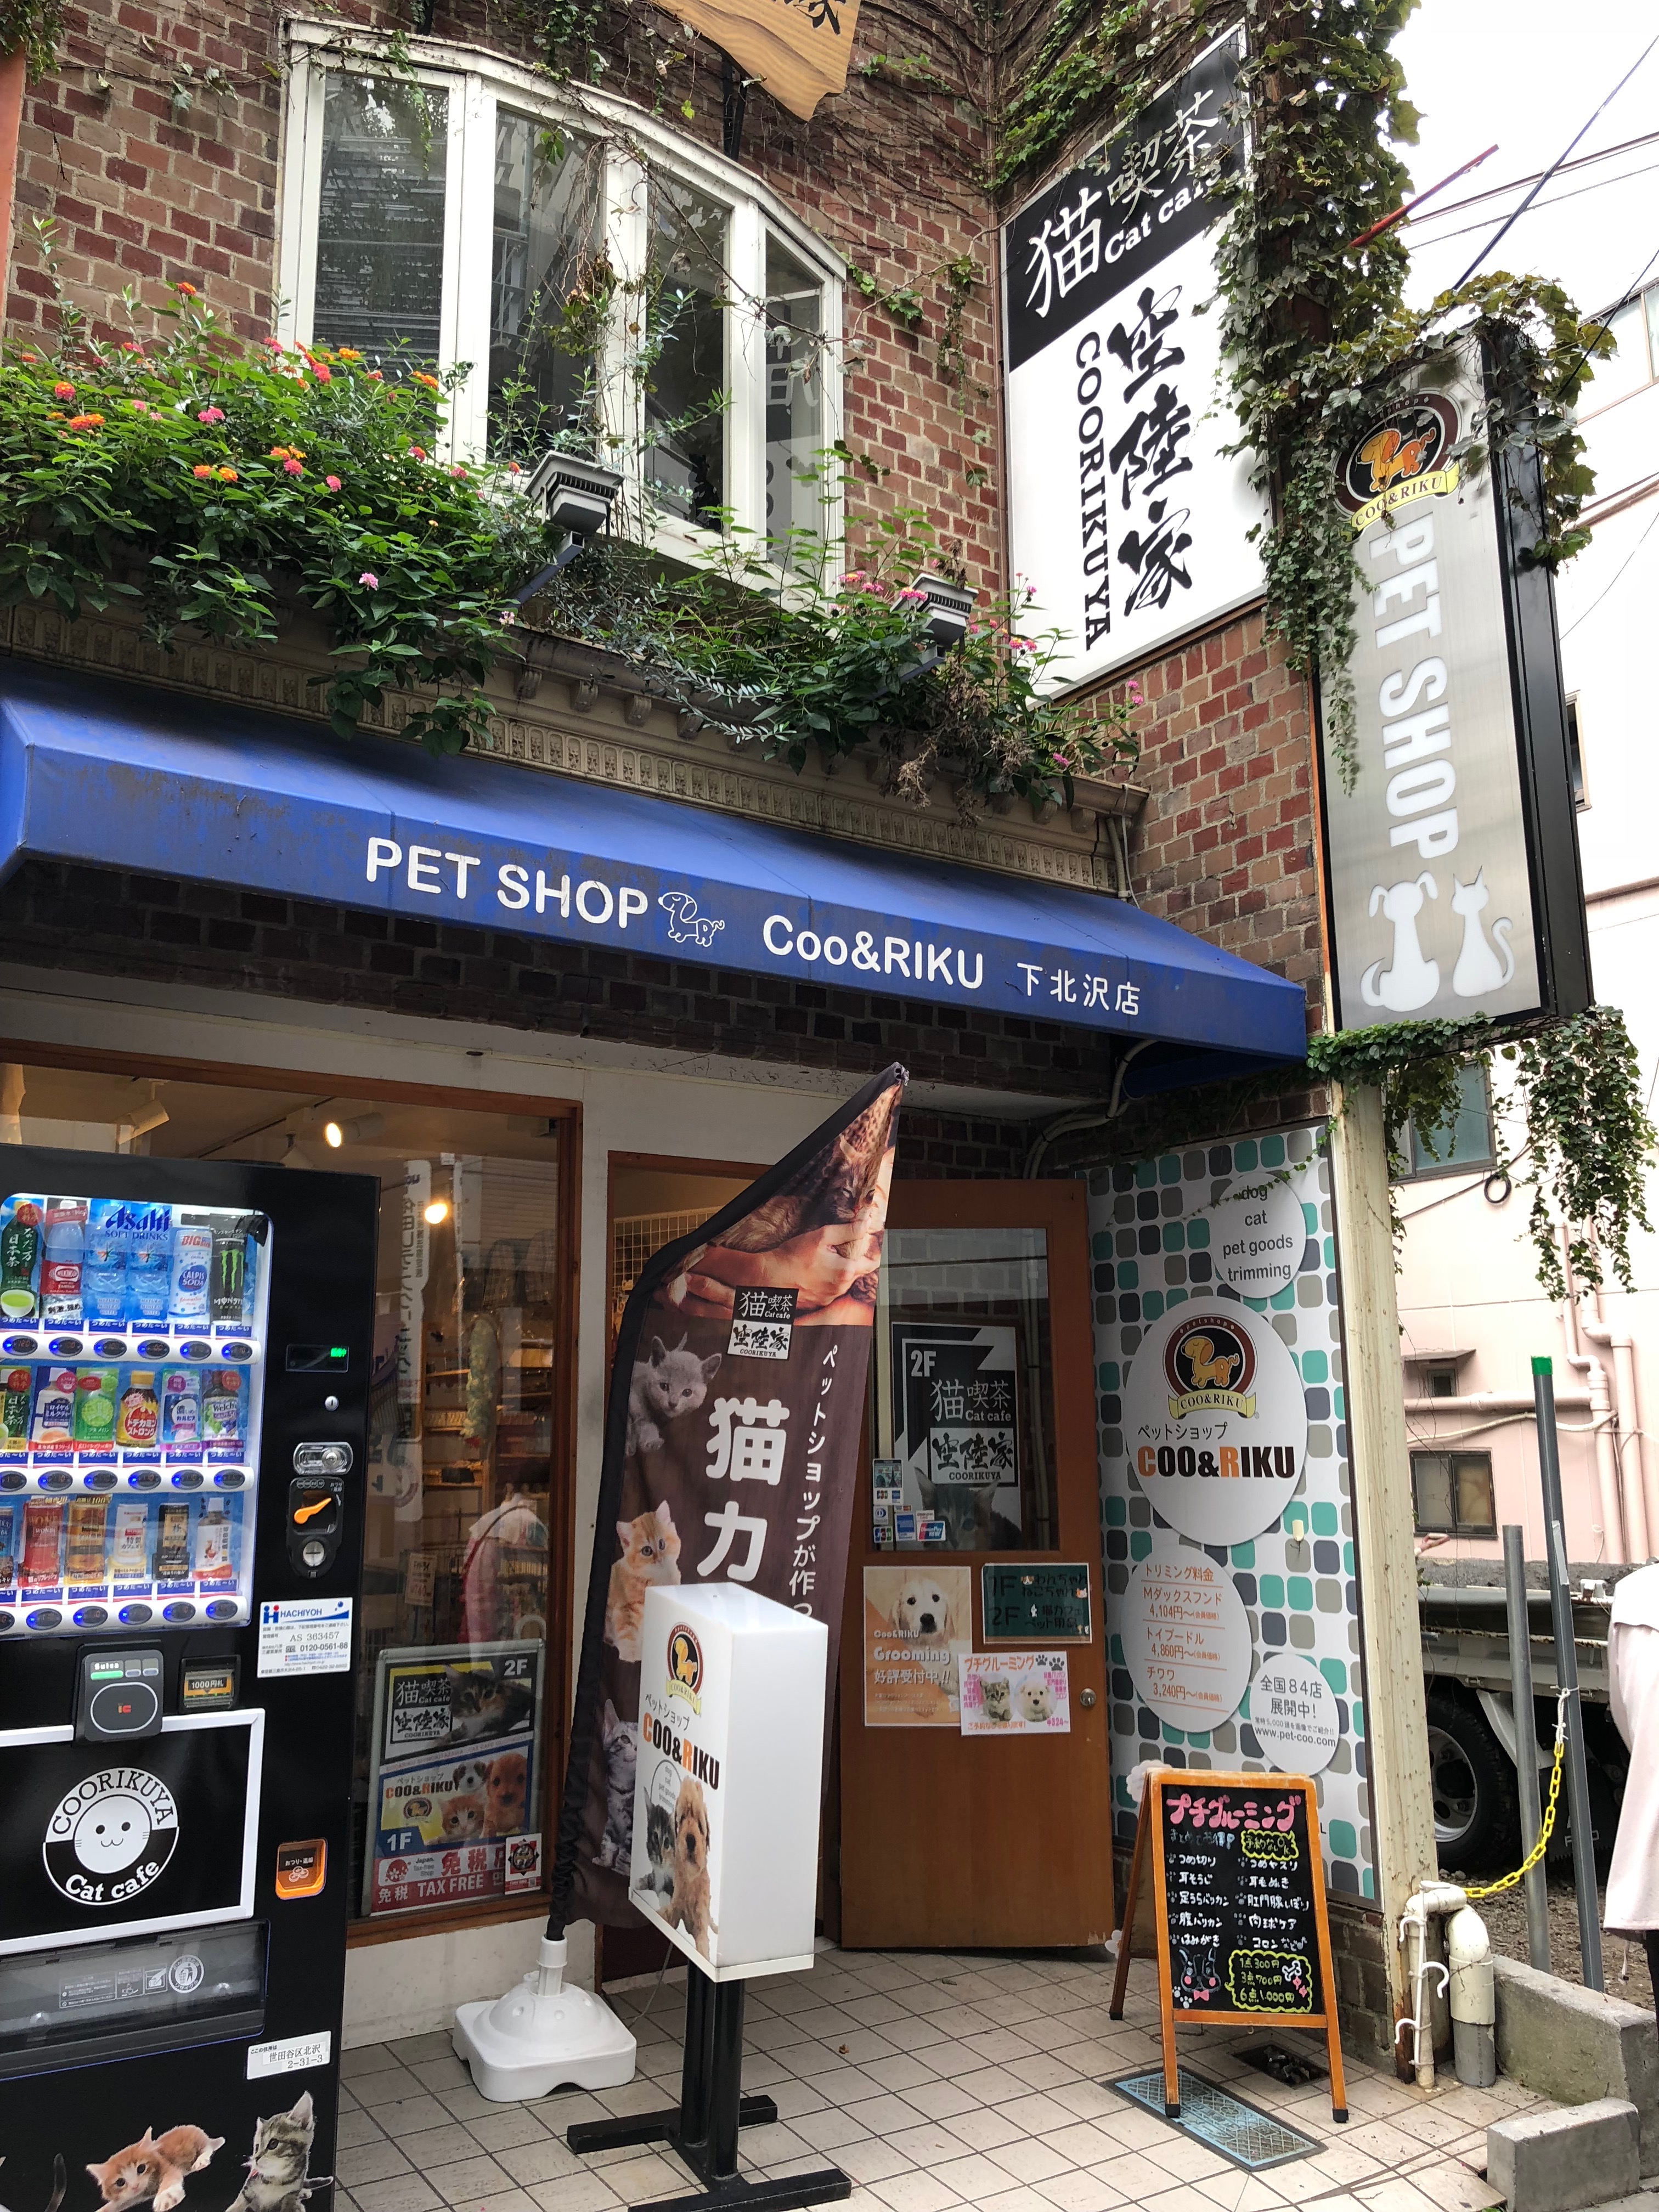 the nearest pet shop